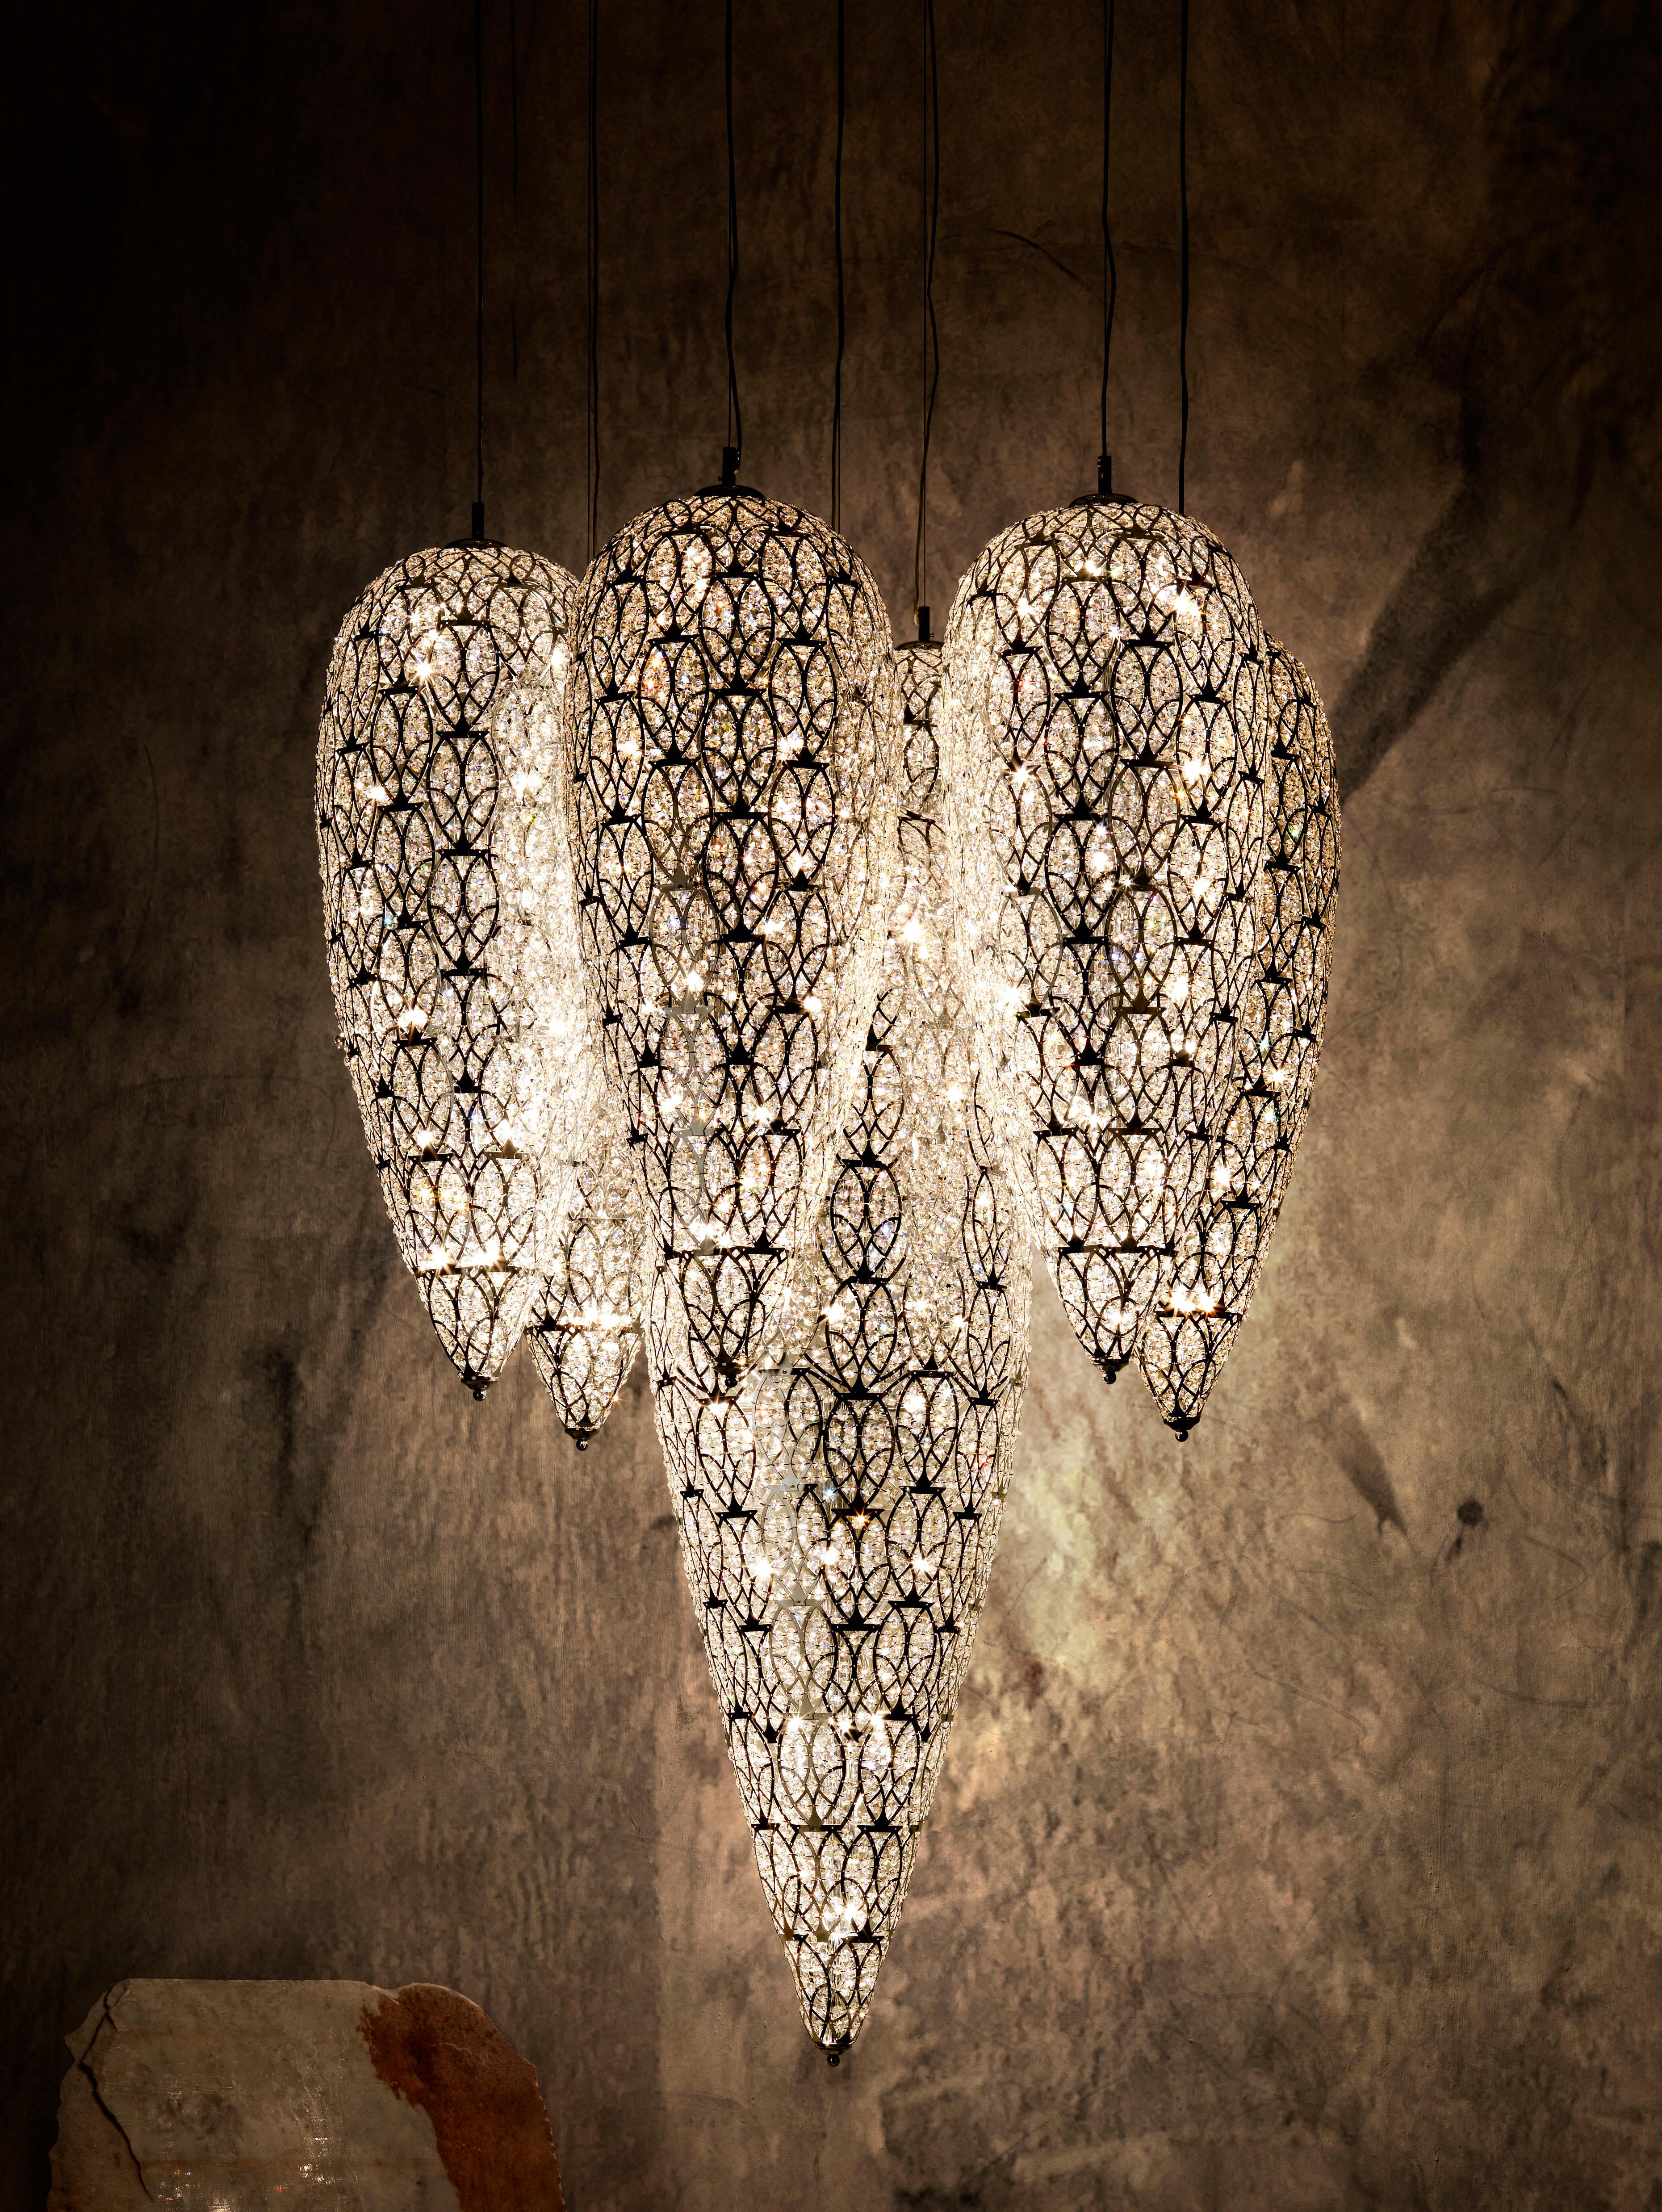 Stainless Steel Chandelier Lightfall 7 Sensation Lamps, Chrome Finish, Arabesque Style, Italy For Sale